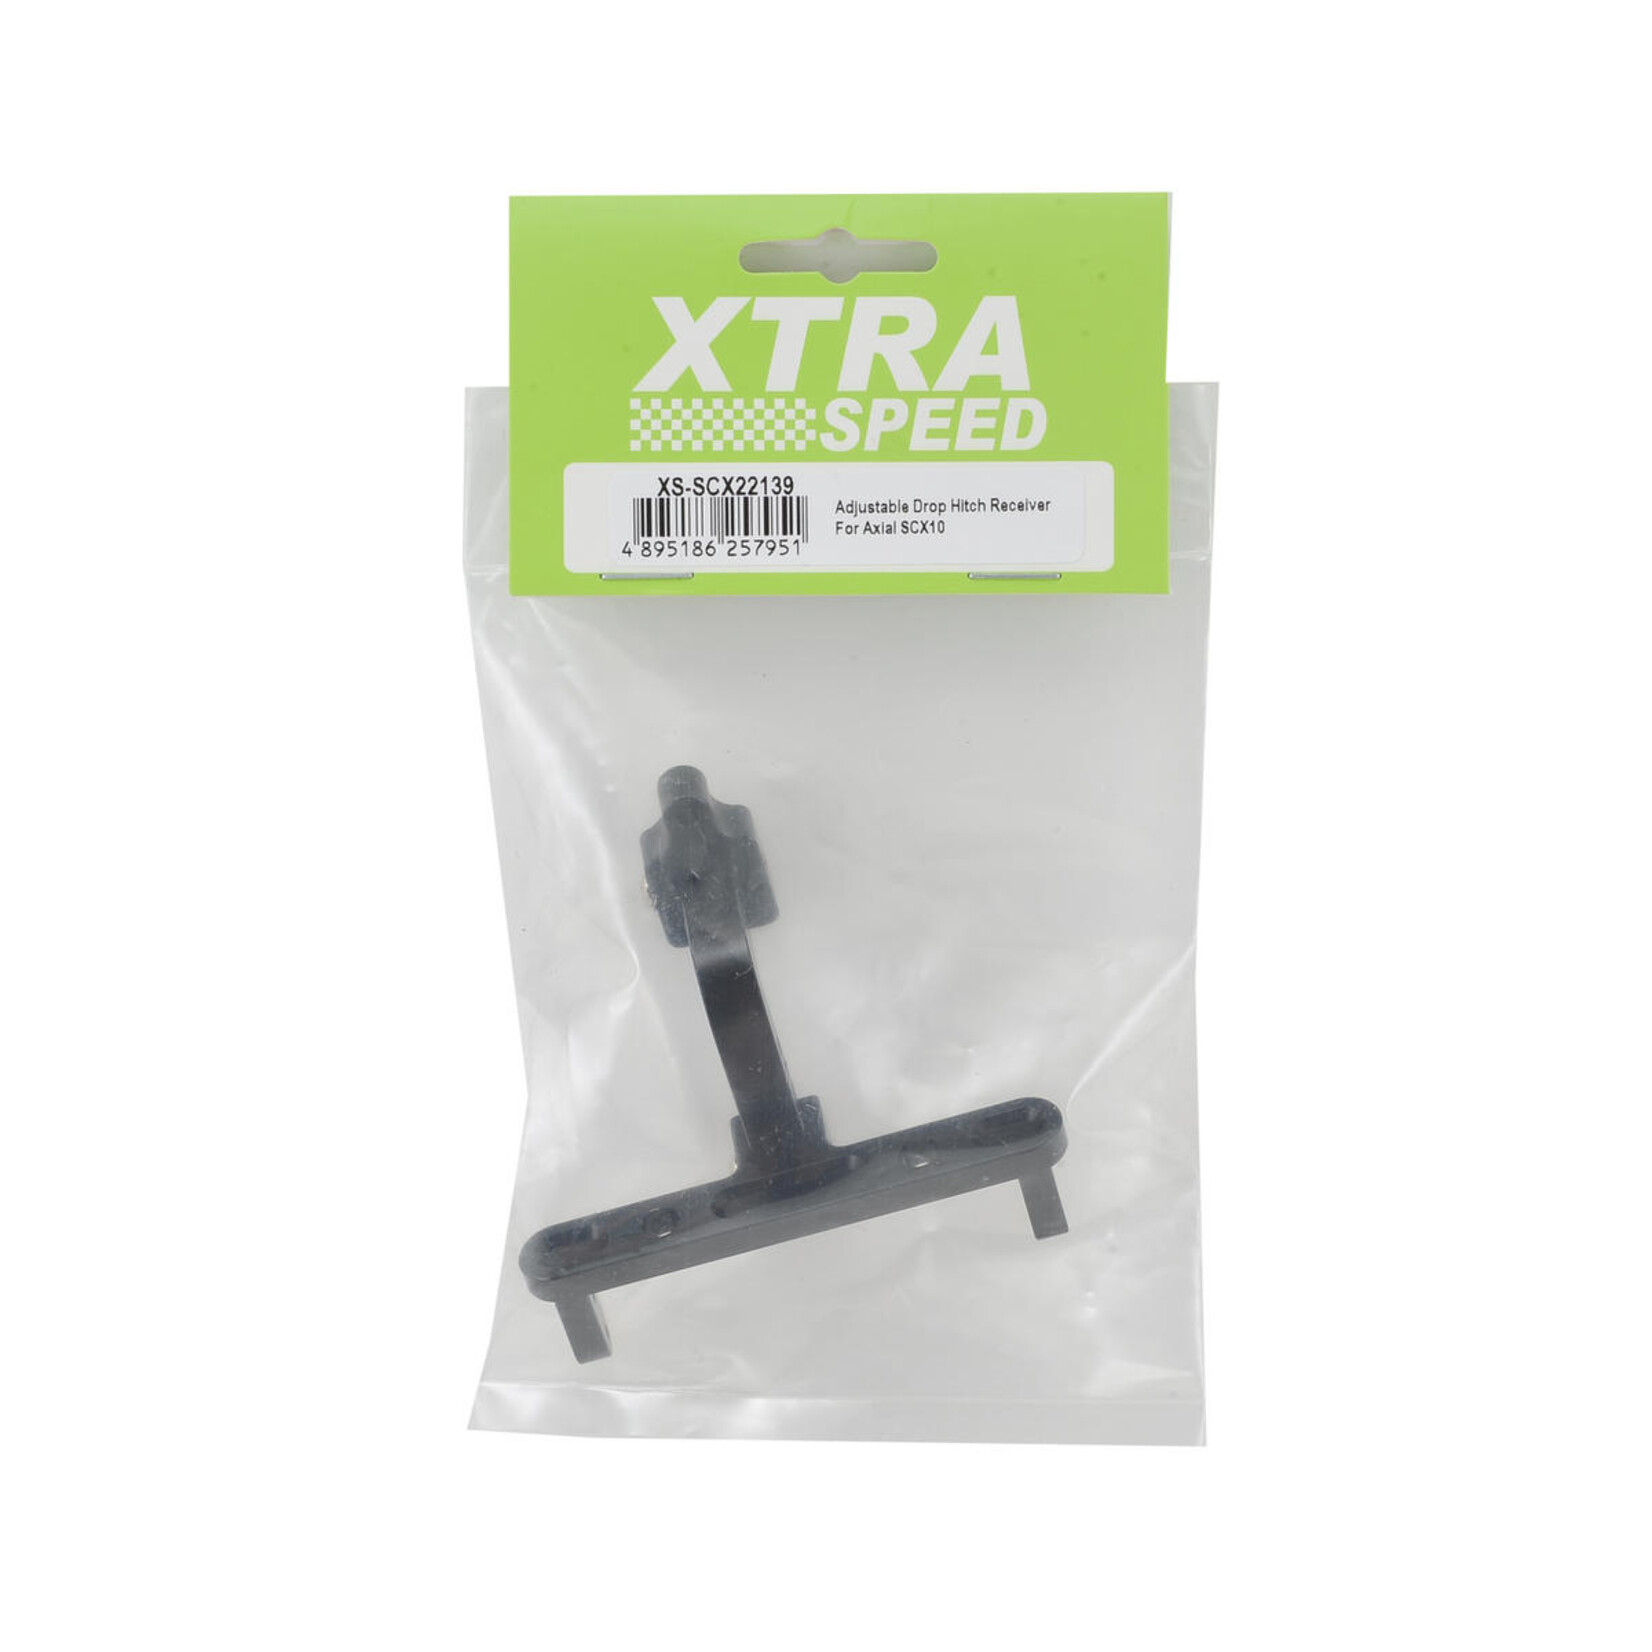 Xtra Speed Xtra Speed SCX10 Adjustable Drop Hitch Receiver #XS-SCX22139